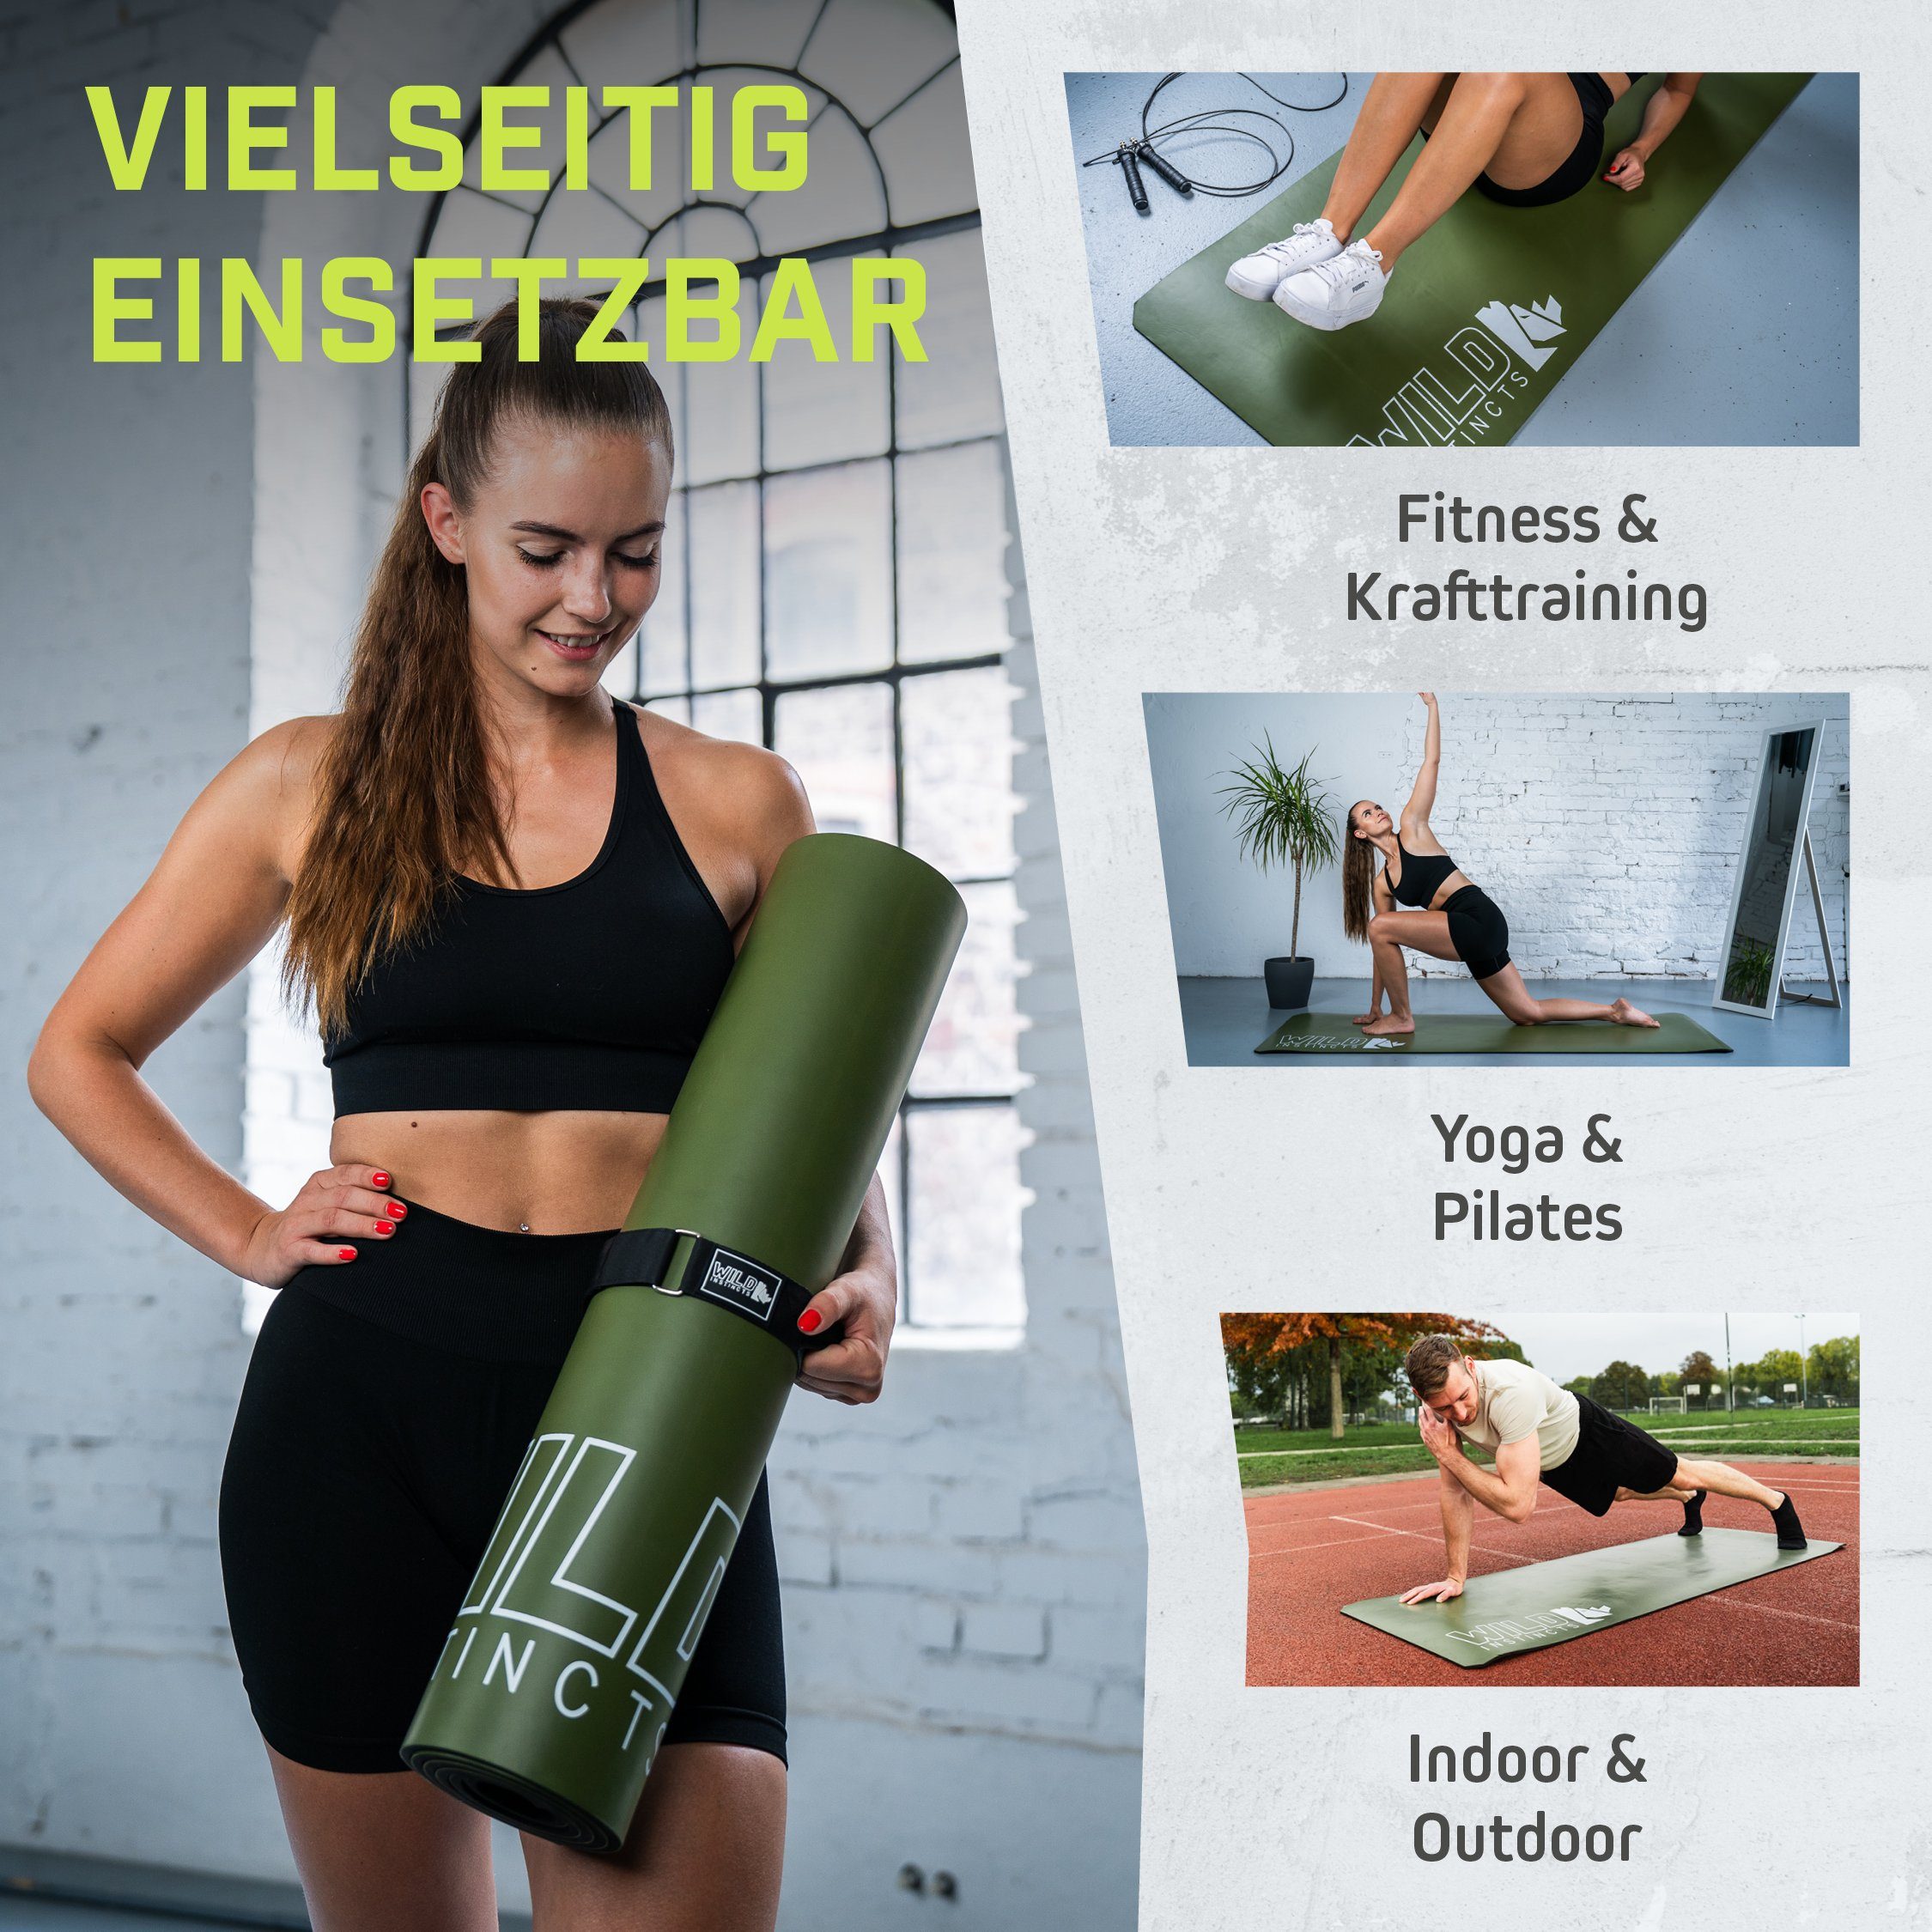 66 Instincts Green Fitnessmatte Matte/Rutschfest 7mm/Sport 185cm Wild cm Olive & Pulse, x Matte/Workout